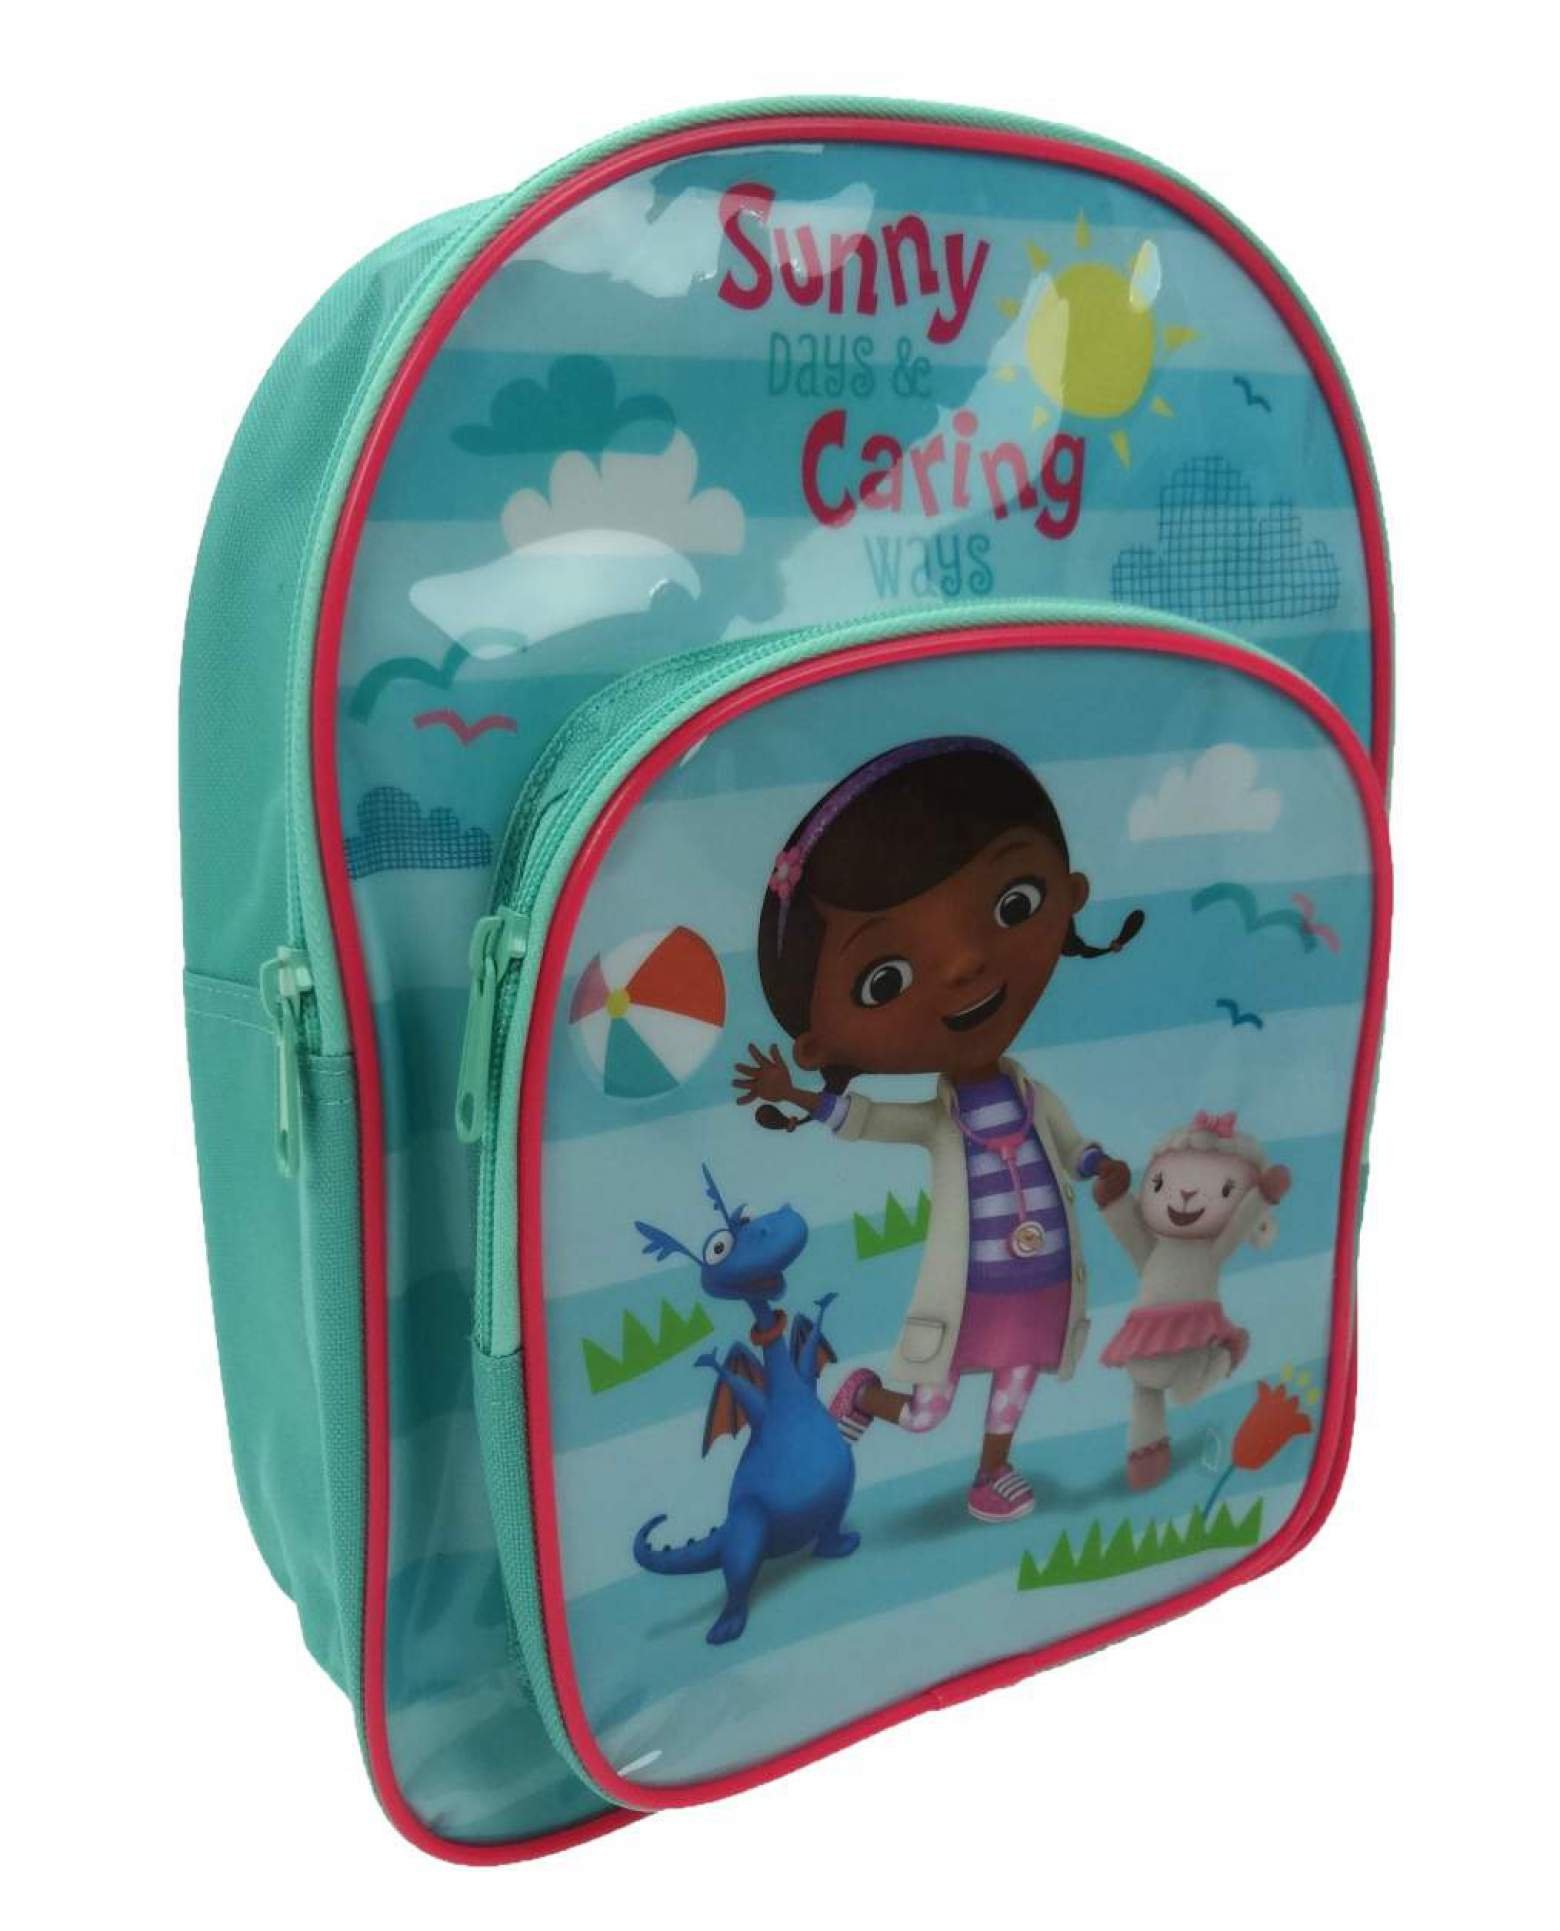 Disney Doc Mcstuffins 'Sunny Days & Caring Ways' School Bag Rucksack Backpack